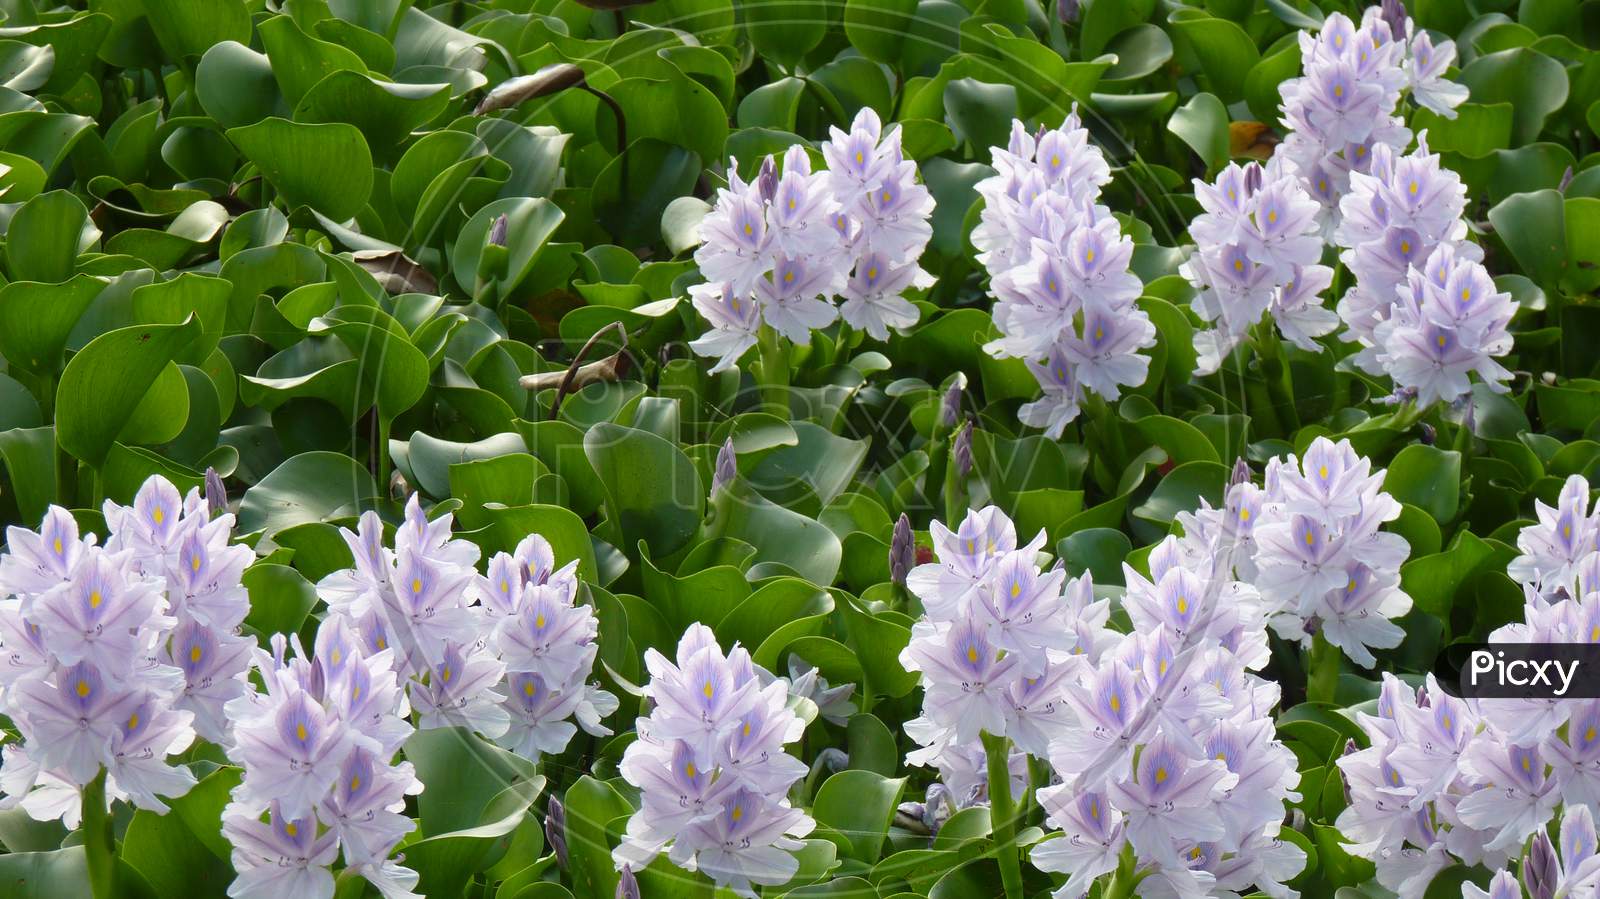 Water Hyacinth